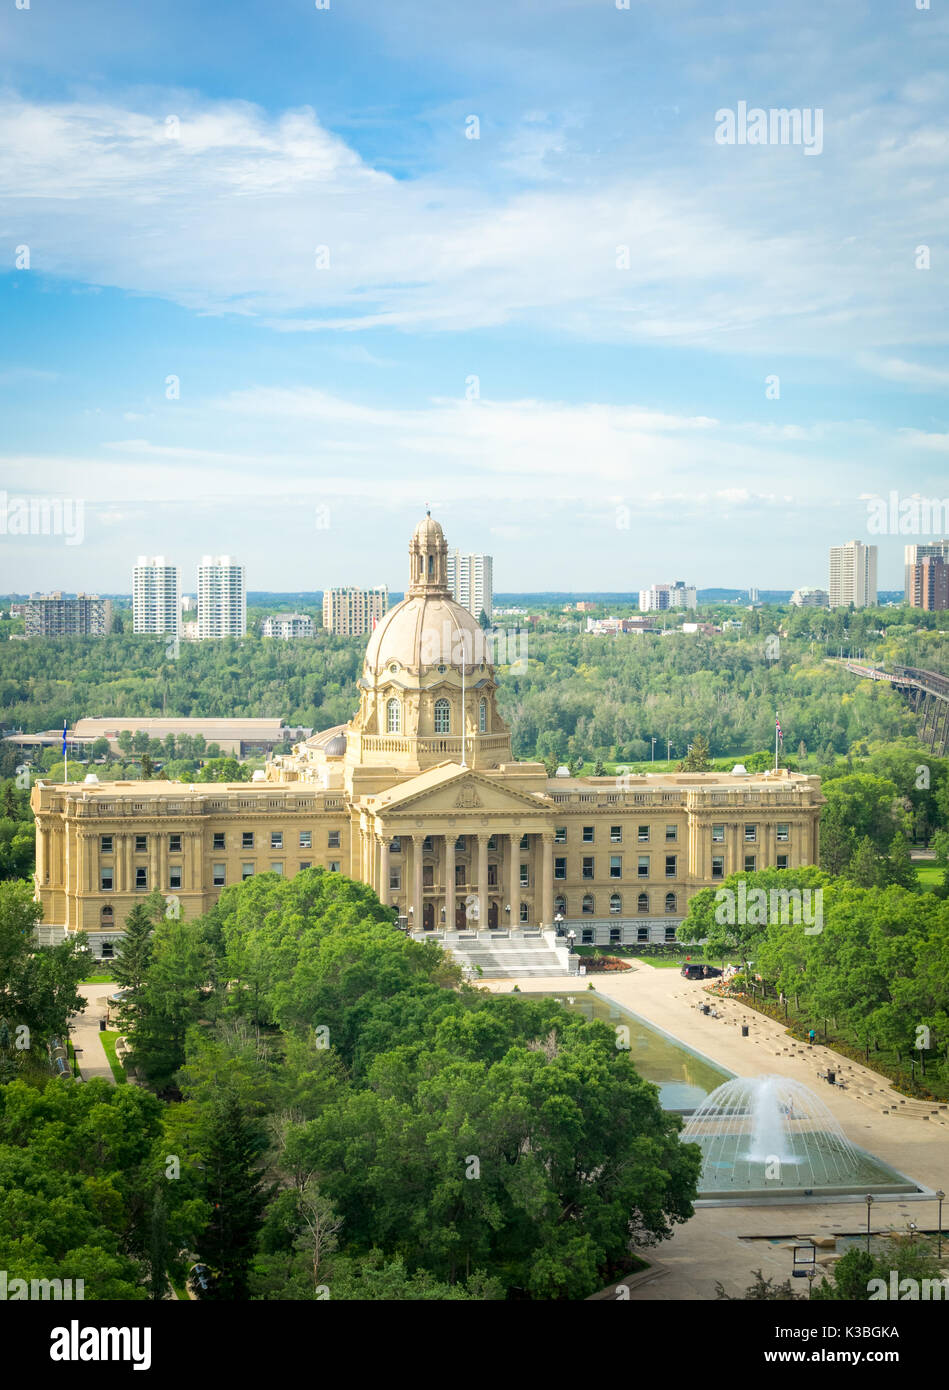 An aerial view of the Alberta Legislature Building, Alberta Legislature Grounds and High Level Bridge in Edmonton, Canada. Stock Photo